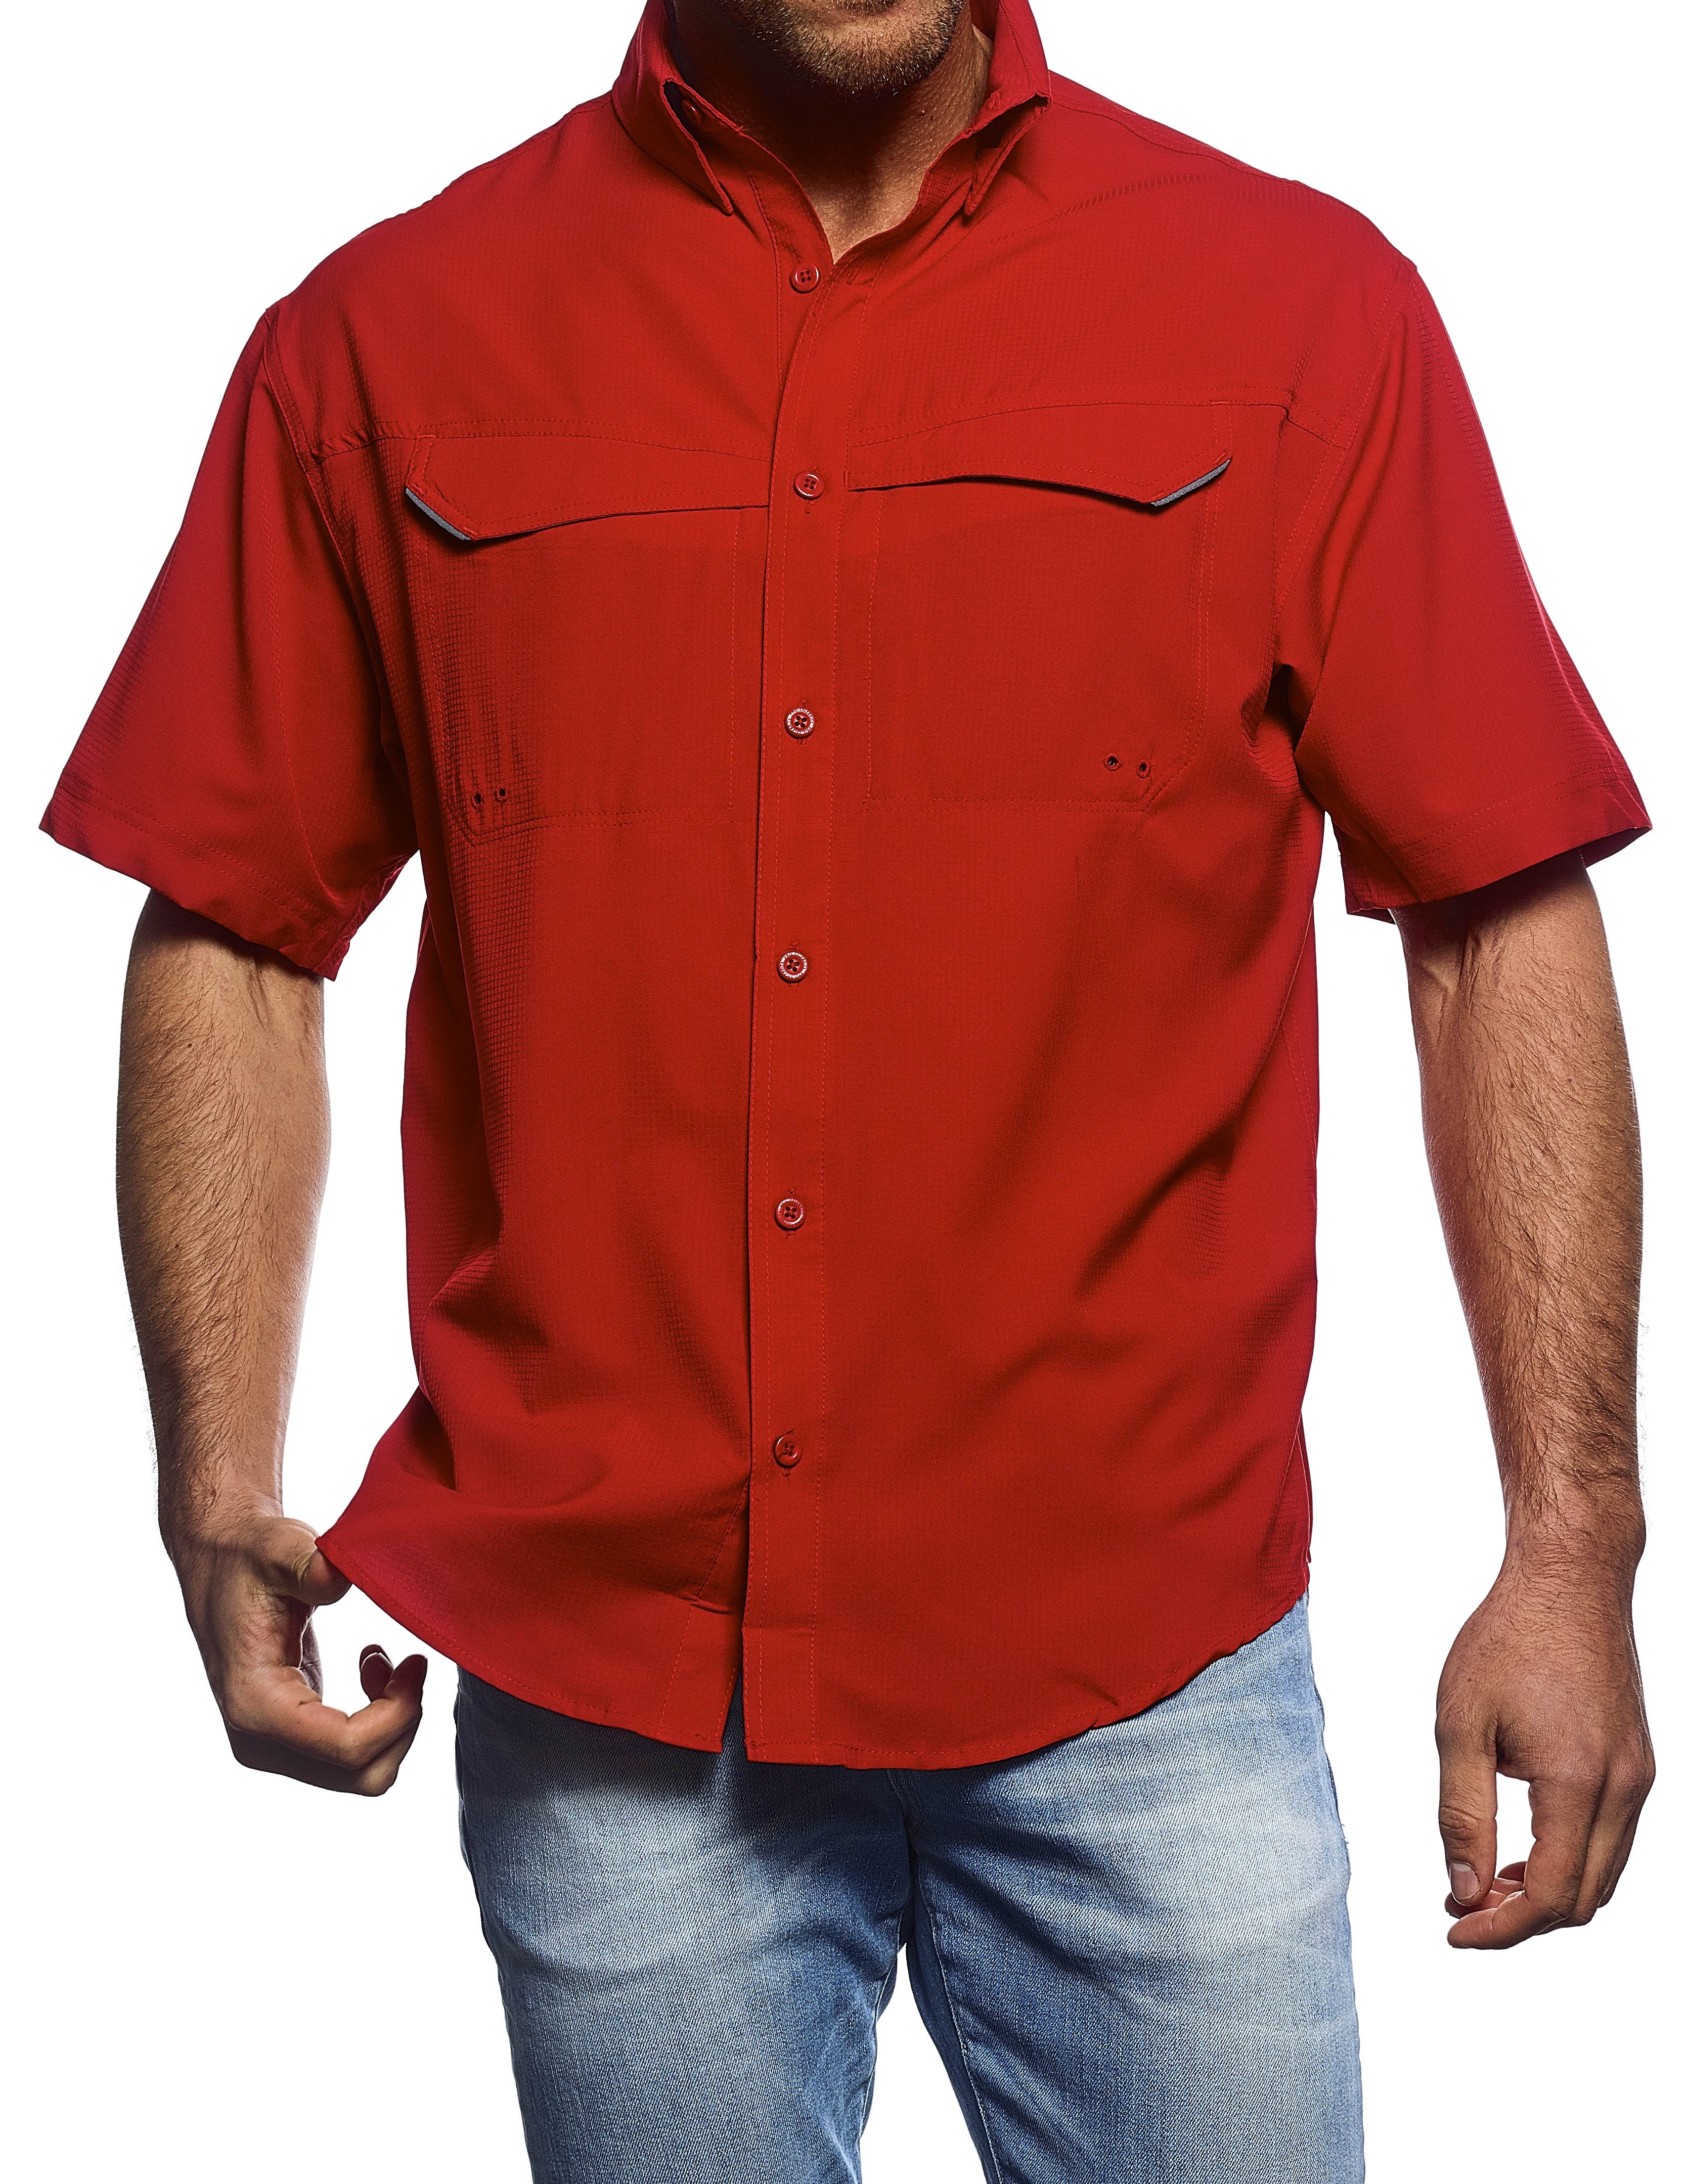 Pro-Celebrity pro fishing shirt selection red/scarlet